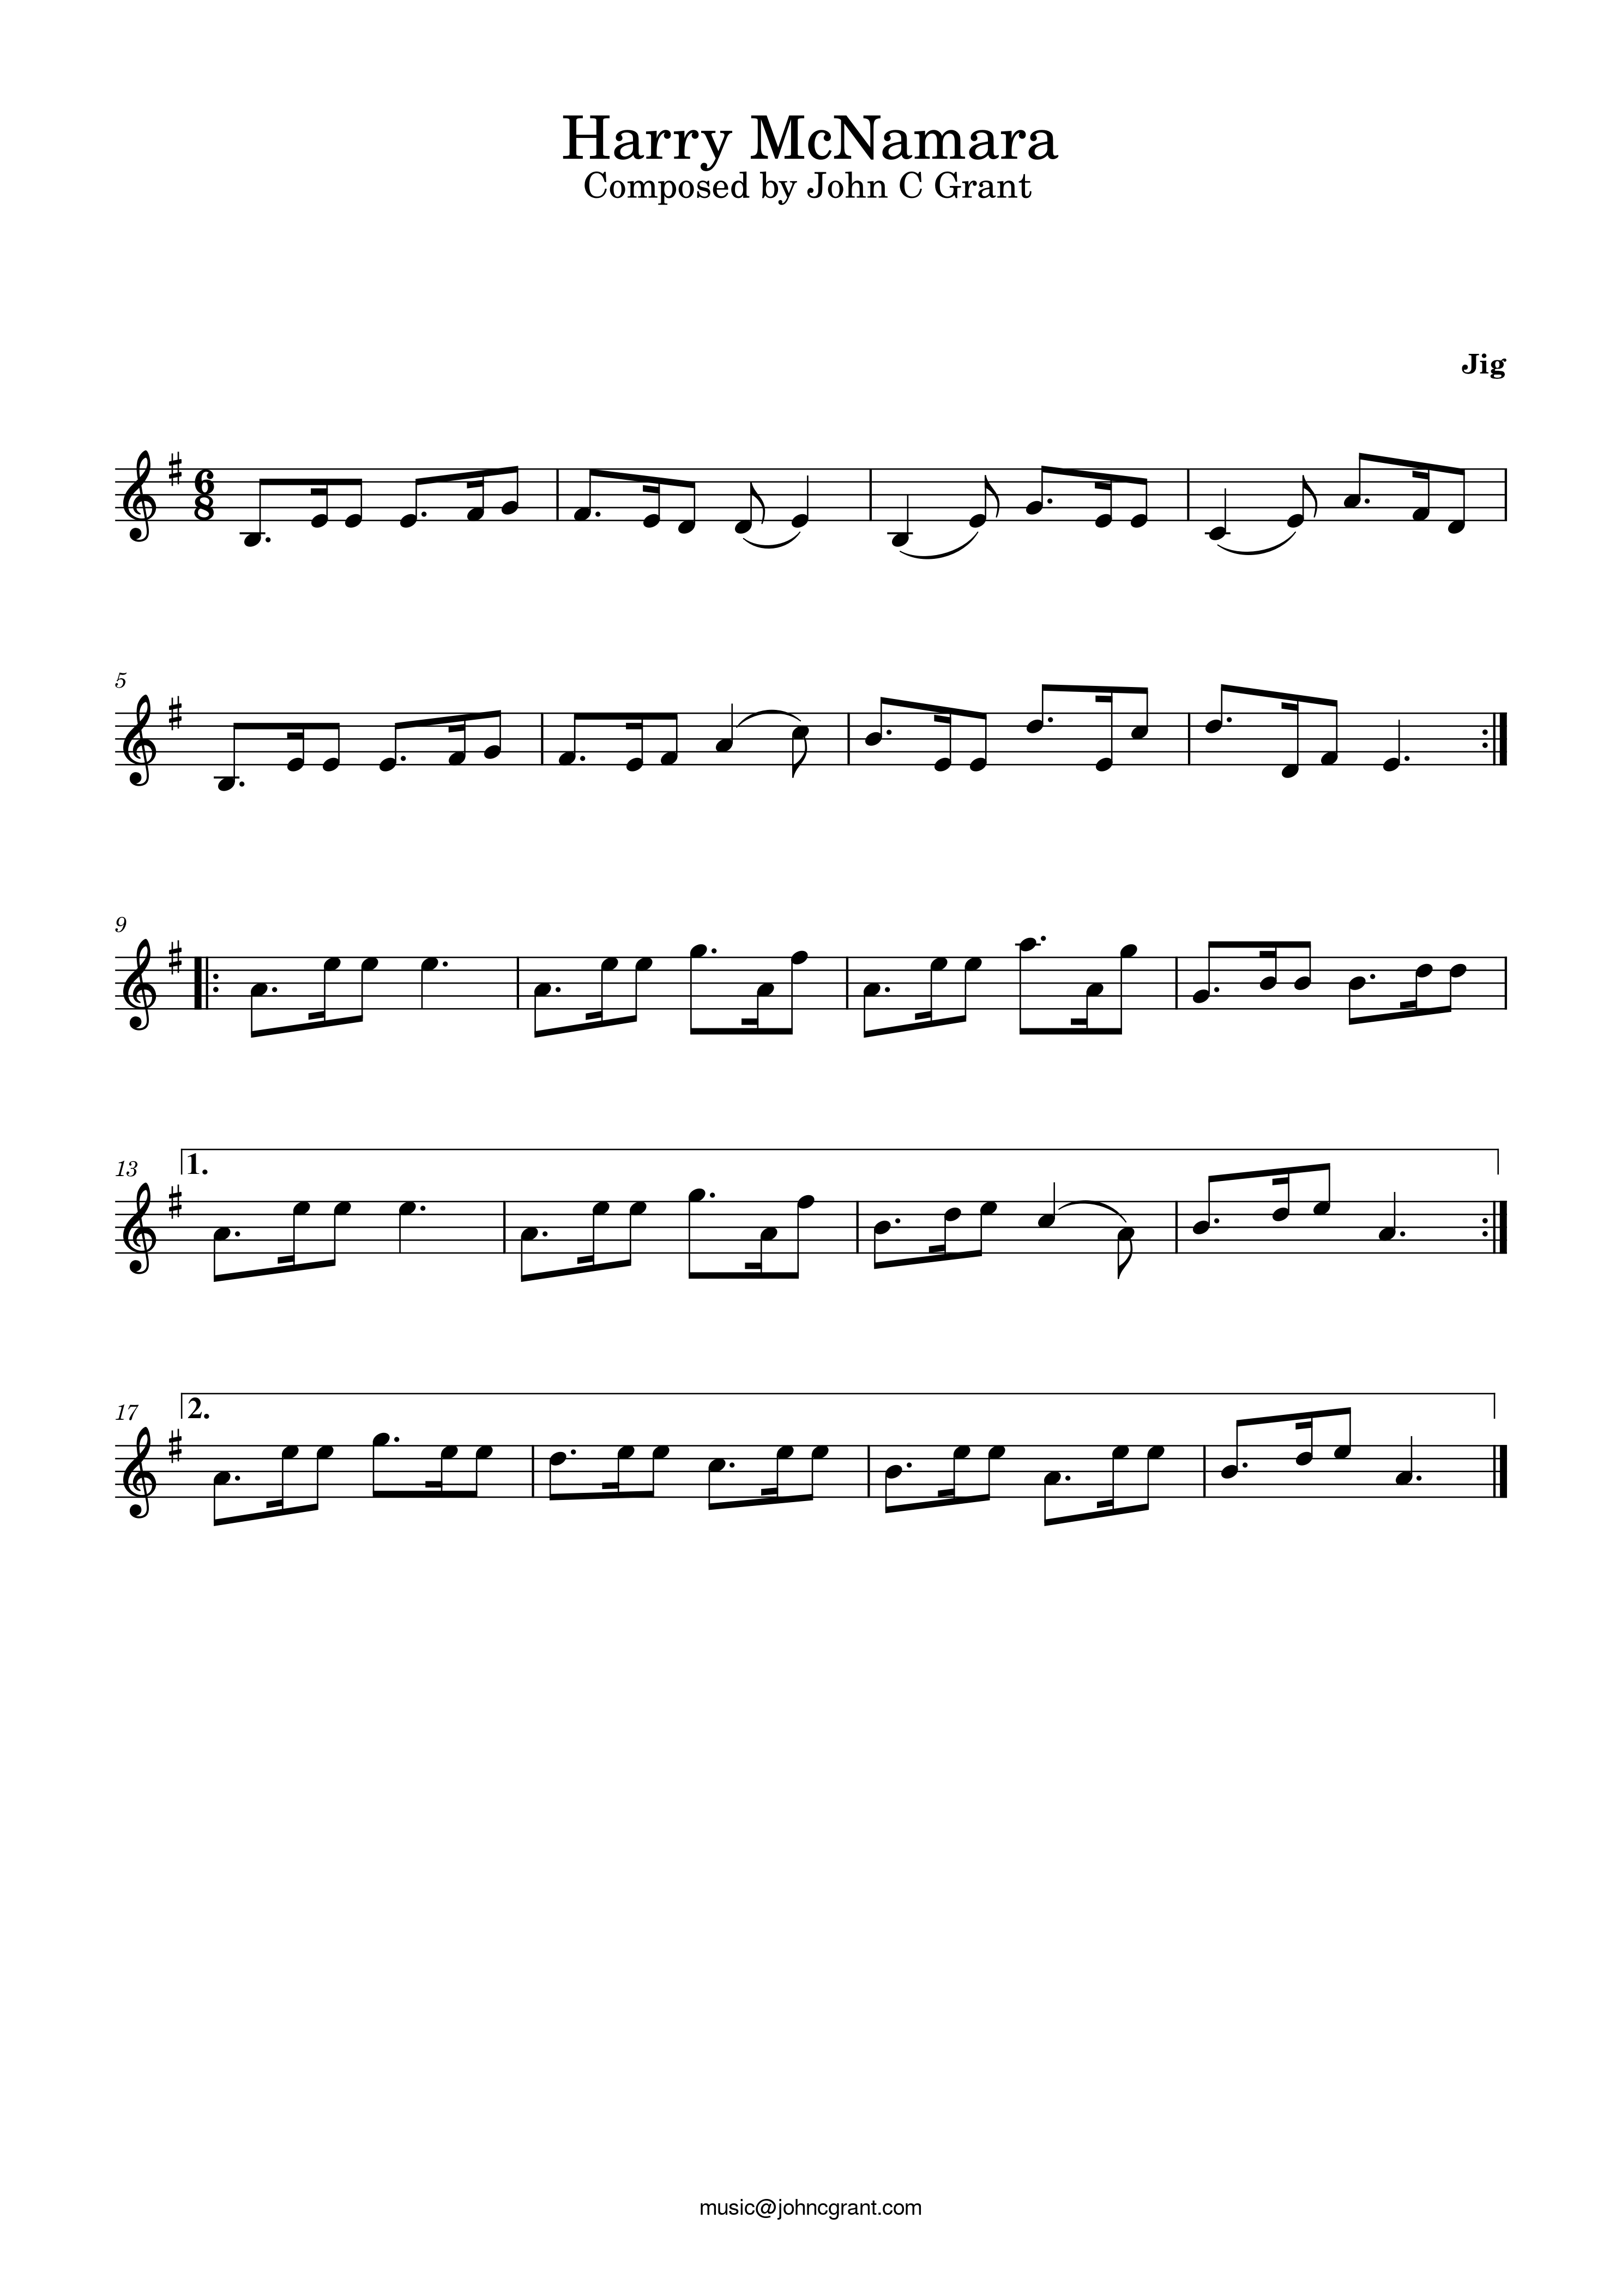 Harry McNamara - Composed by John C Grant (https://johncgrant.com). Traditional composer from Kilmarnock, Ayrshire, Scotland.